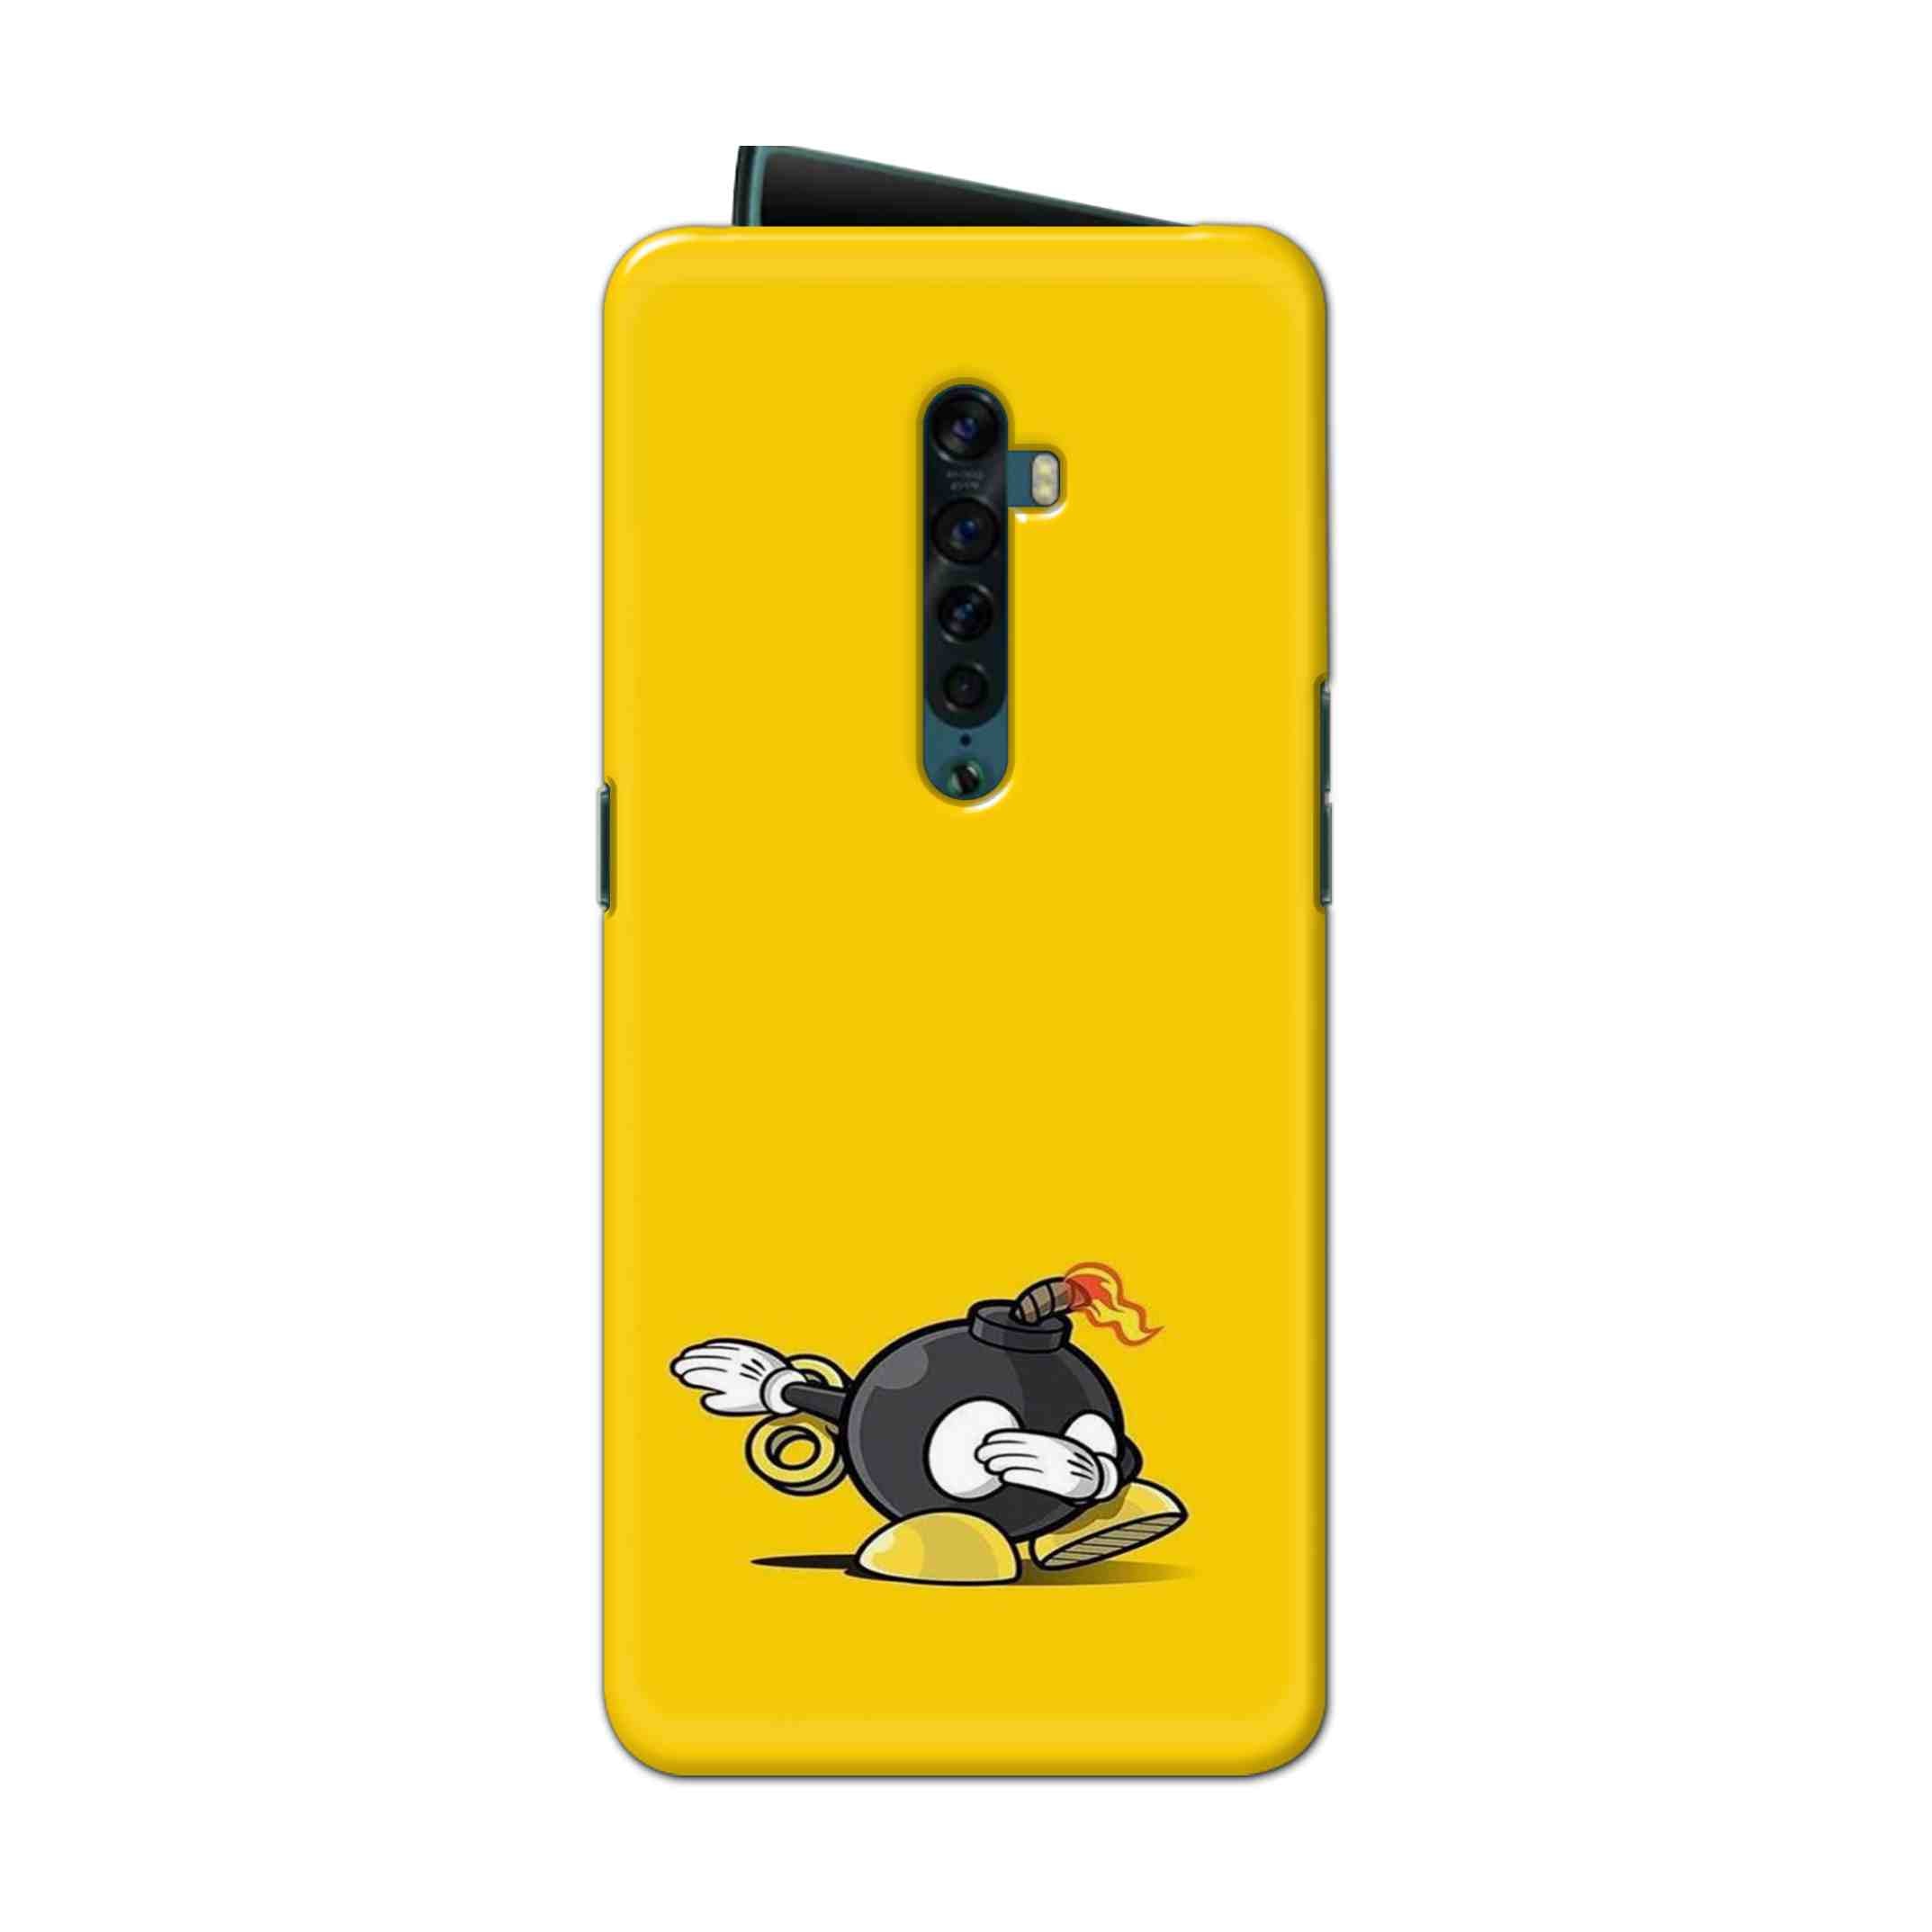 Buy Dashing Bomb Hard Back Mobile Phone Case Cover For Oppo Reno 2 Online